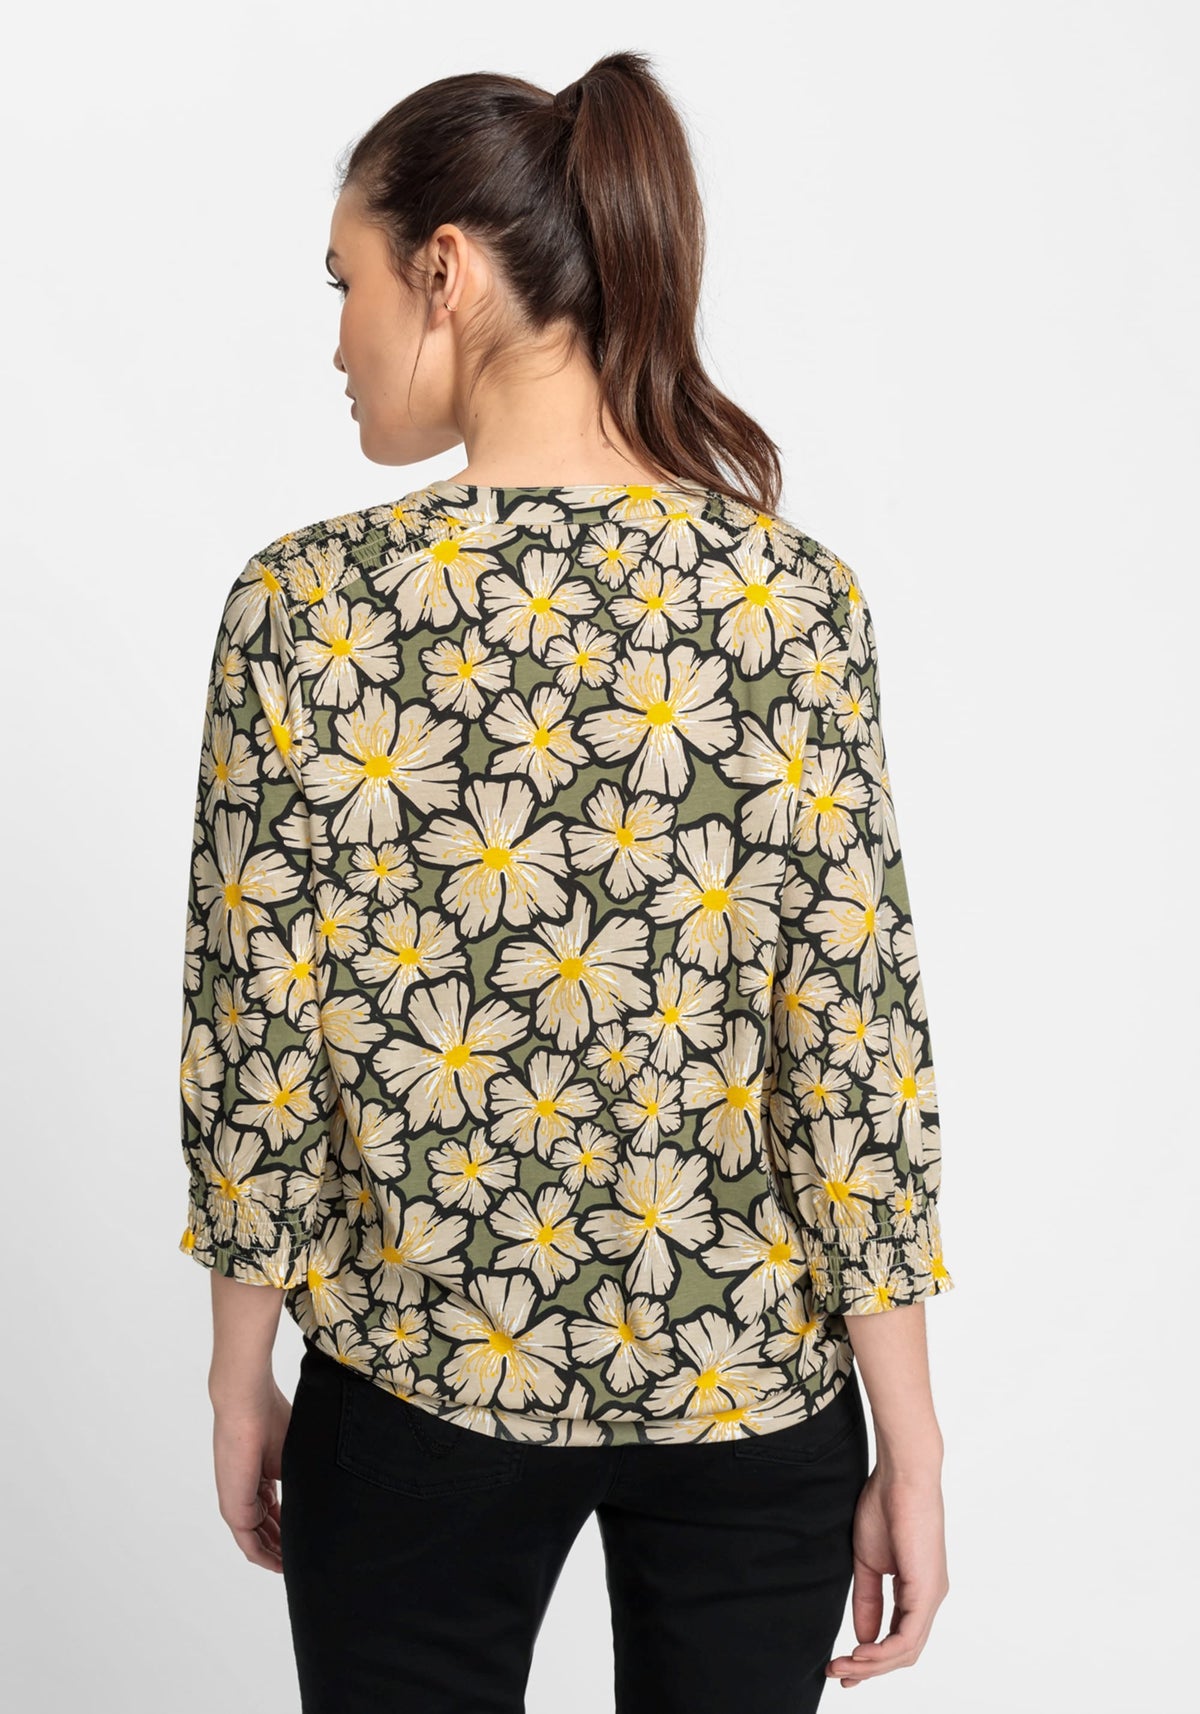 Cotton Blend Floral Print Tunic T-Shirt containing TENCEL™ Modal